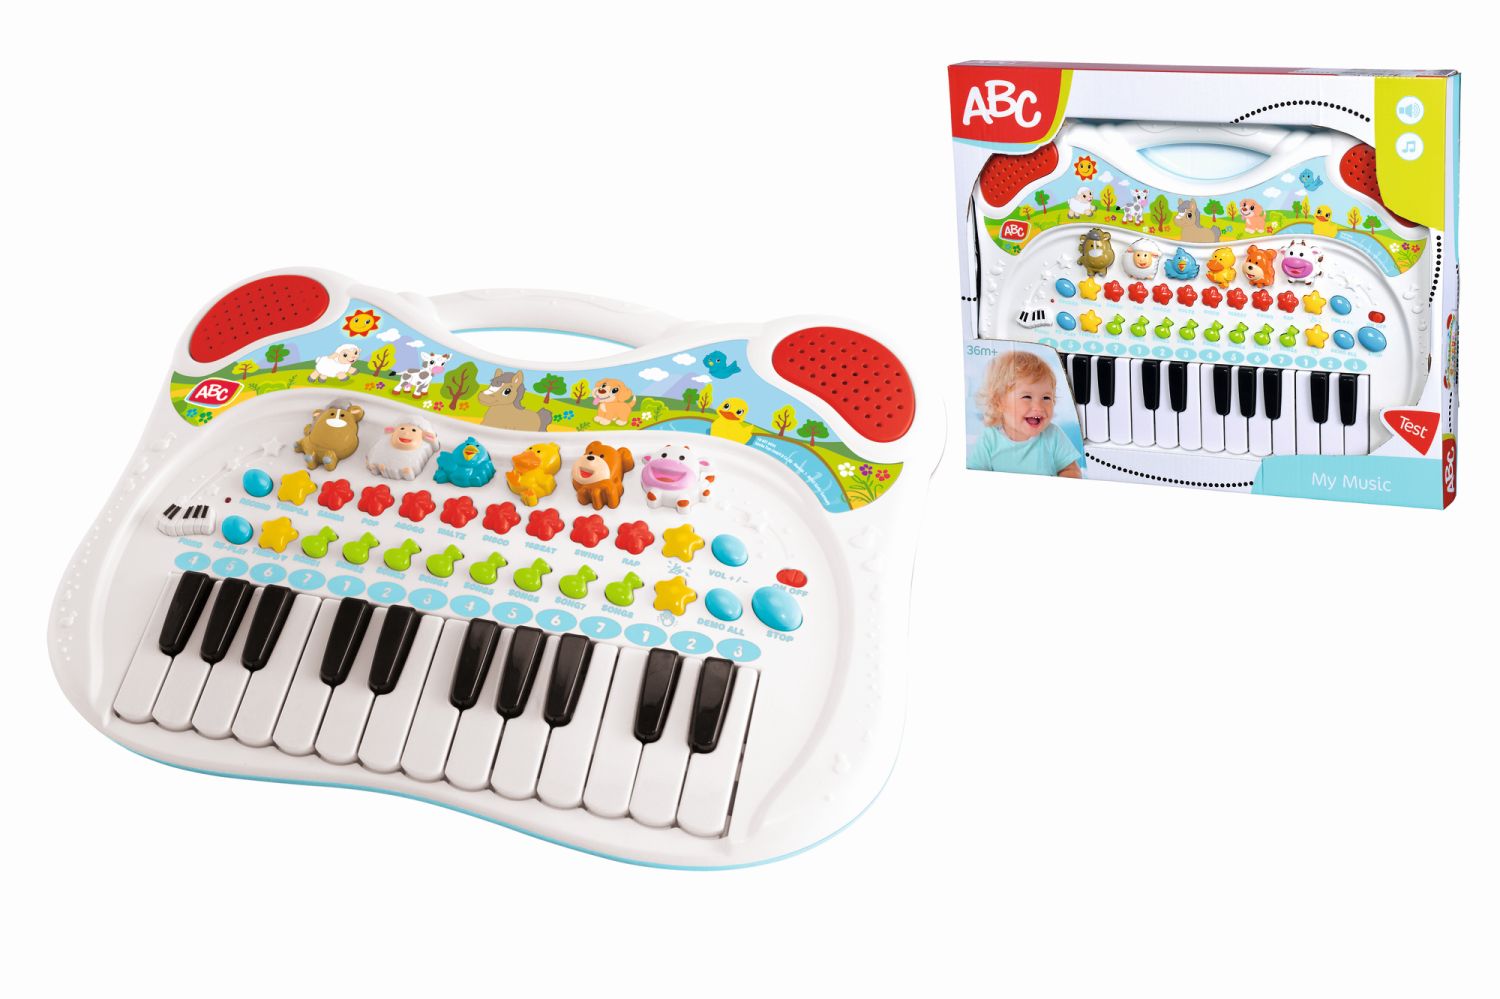 Simba Toys ABC Keyboard Tier 104010044